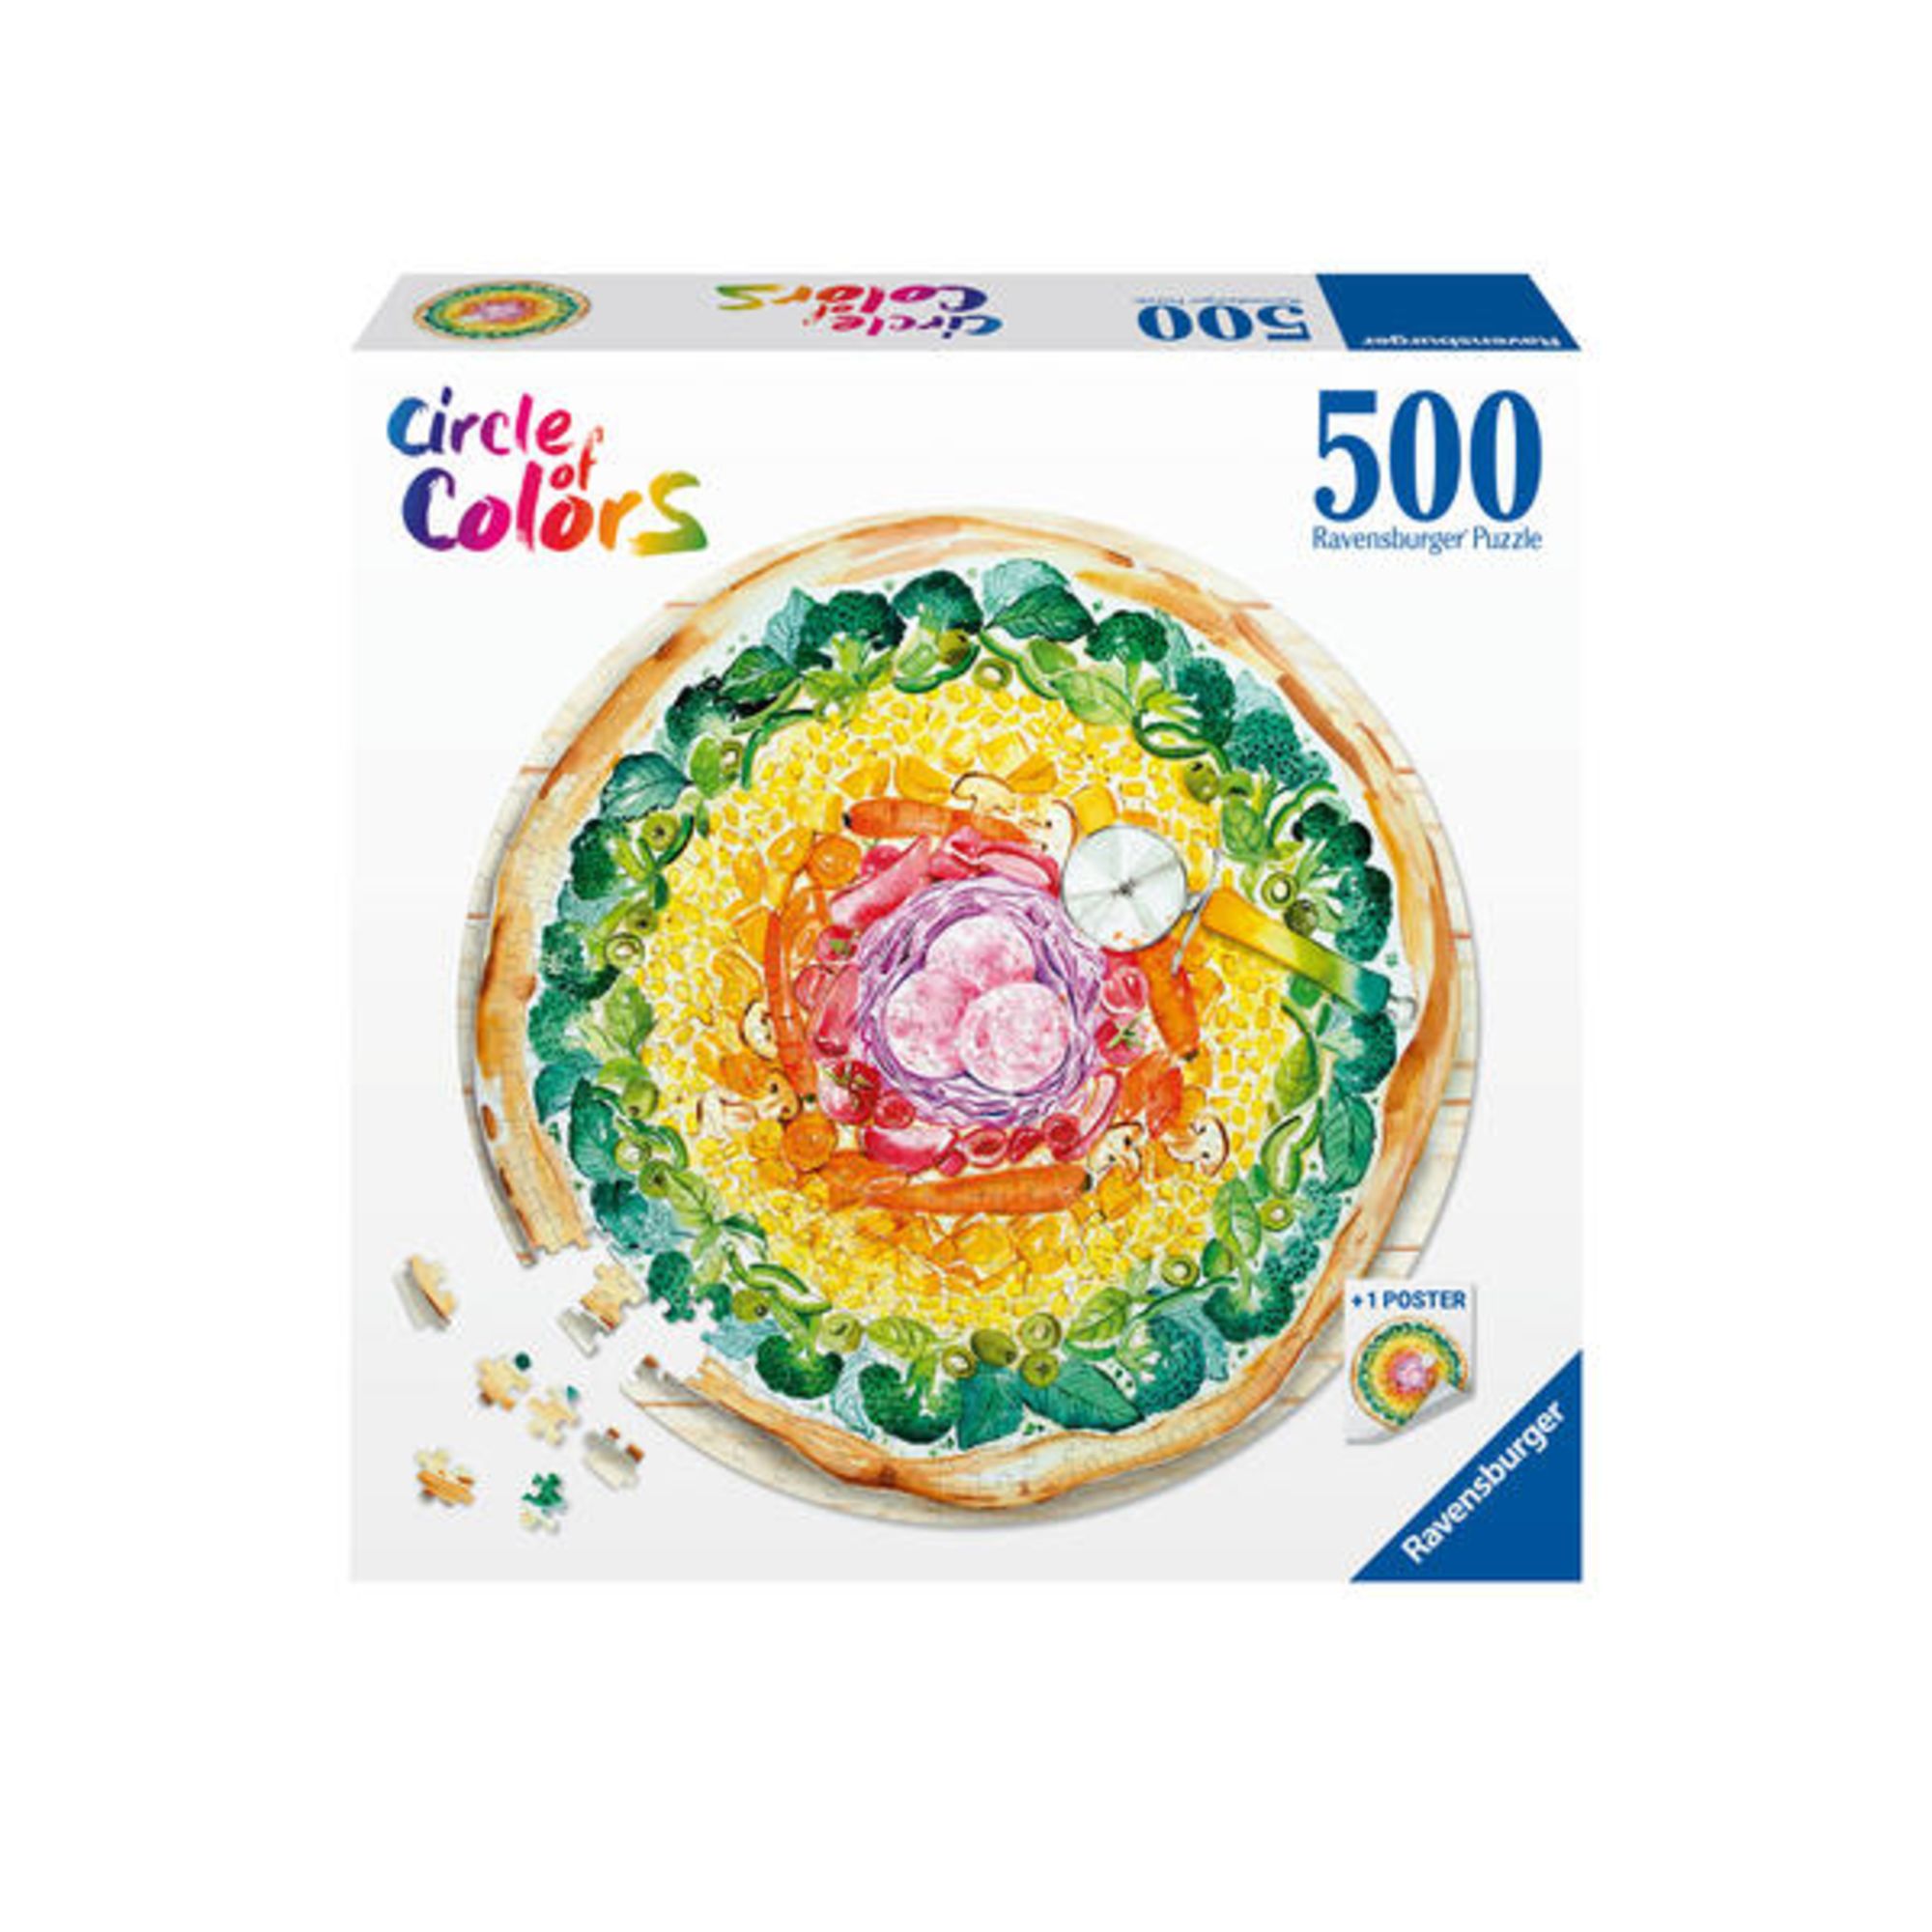 Ravensburger - Circle of Colors Pizza, 500 Teile' kaufen - Spielwaren